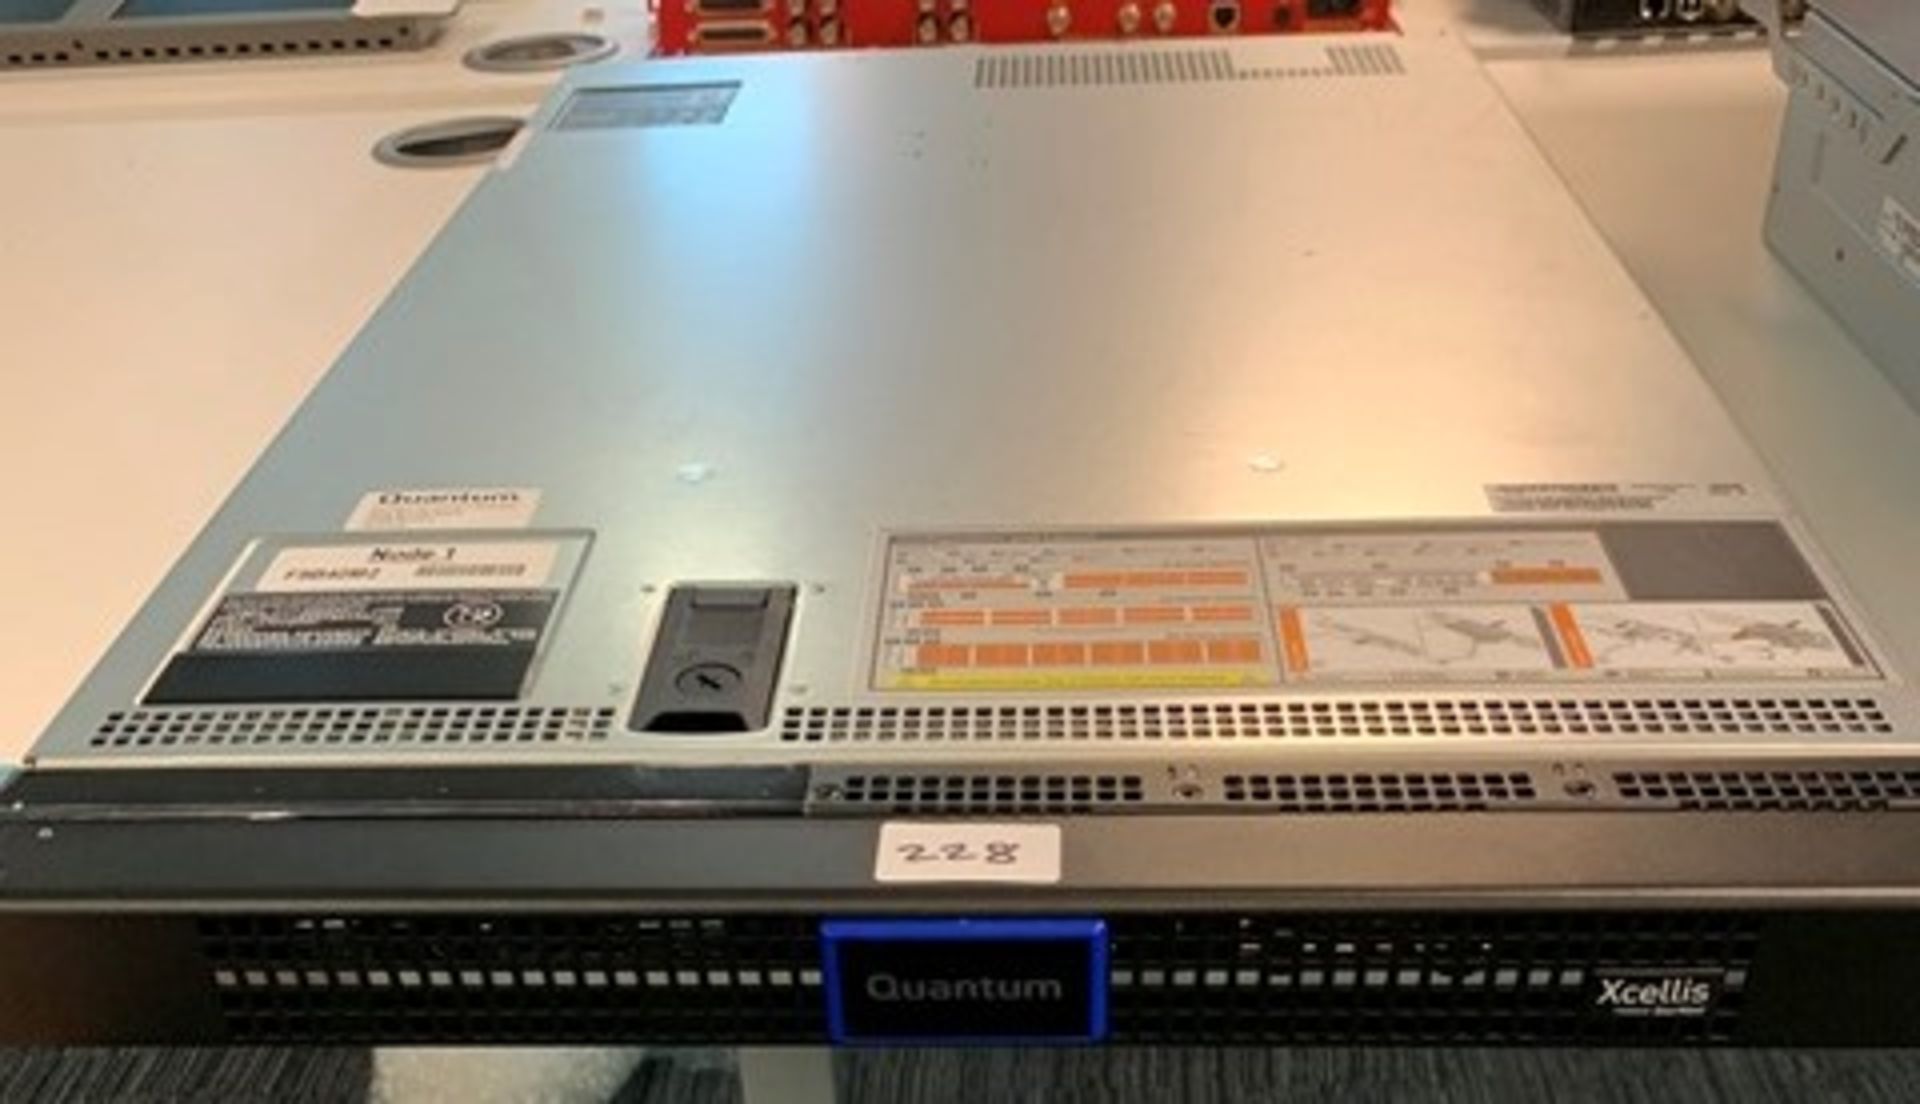 Quantum Xcellis storage server Node 1 Model 3-07270-11 s/n av1746ckh00490 c/w E26S Xeon processor &